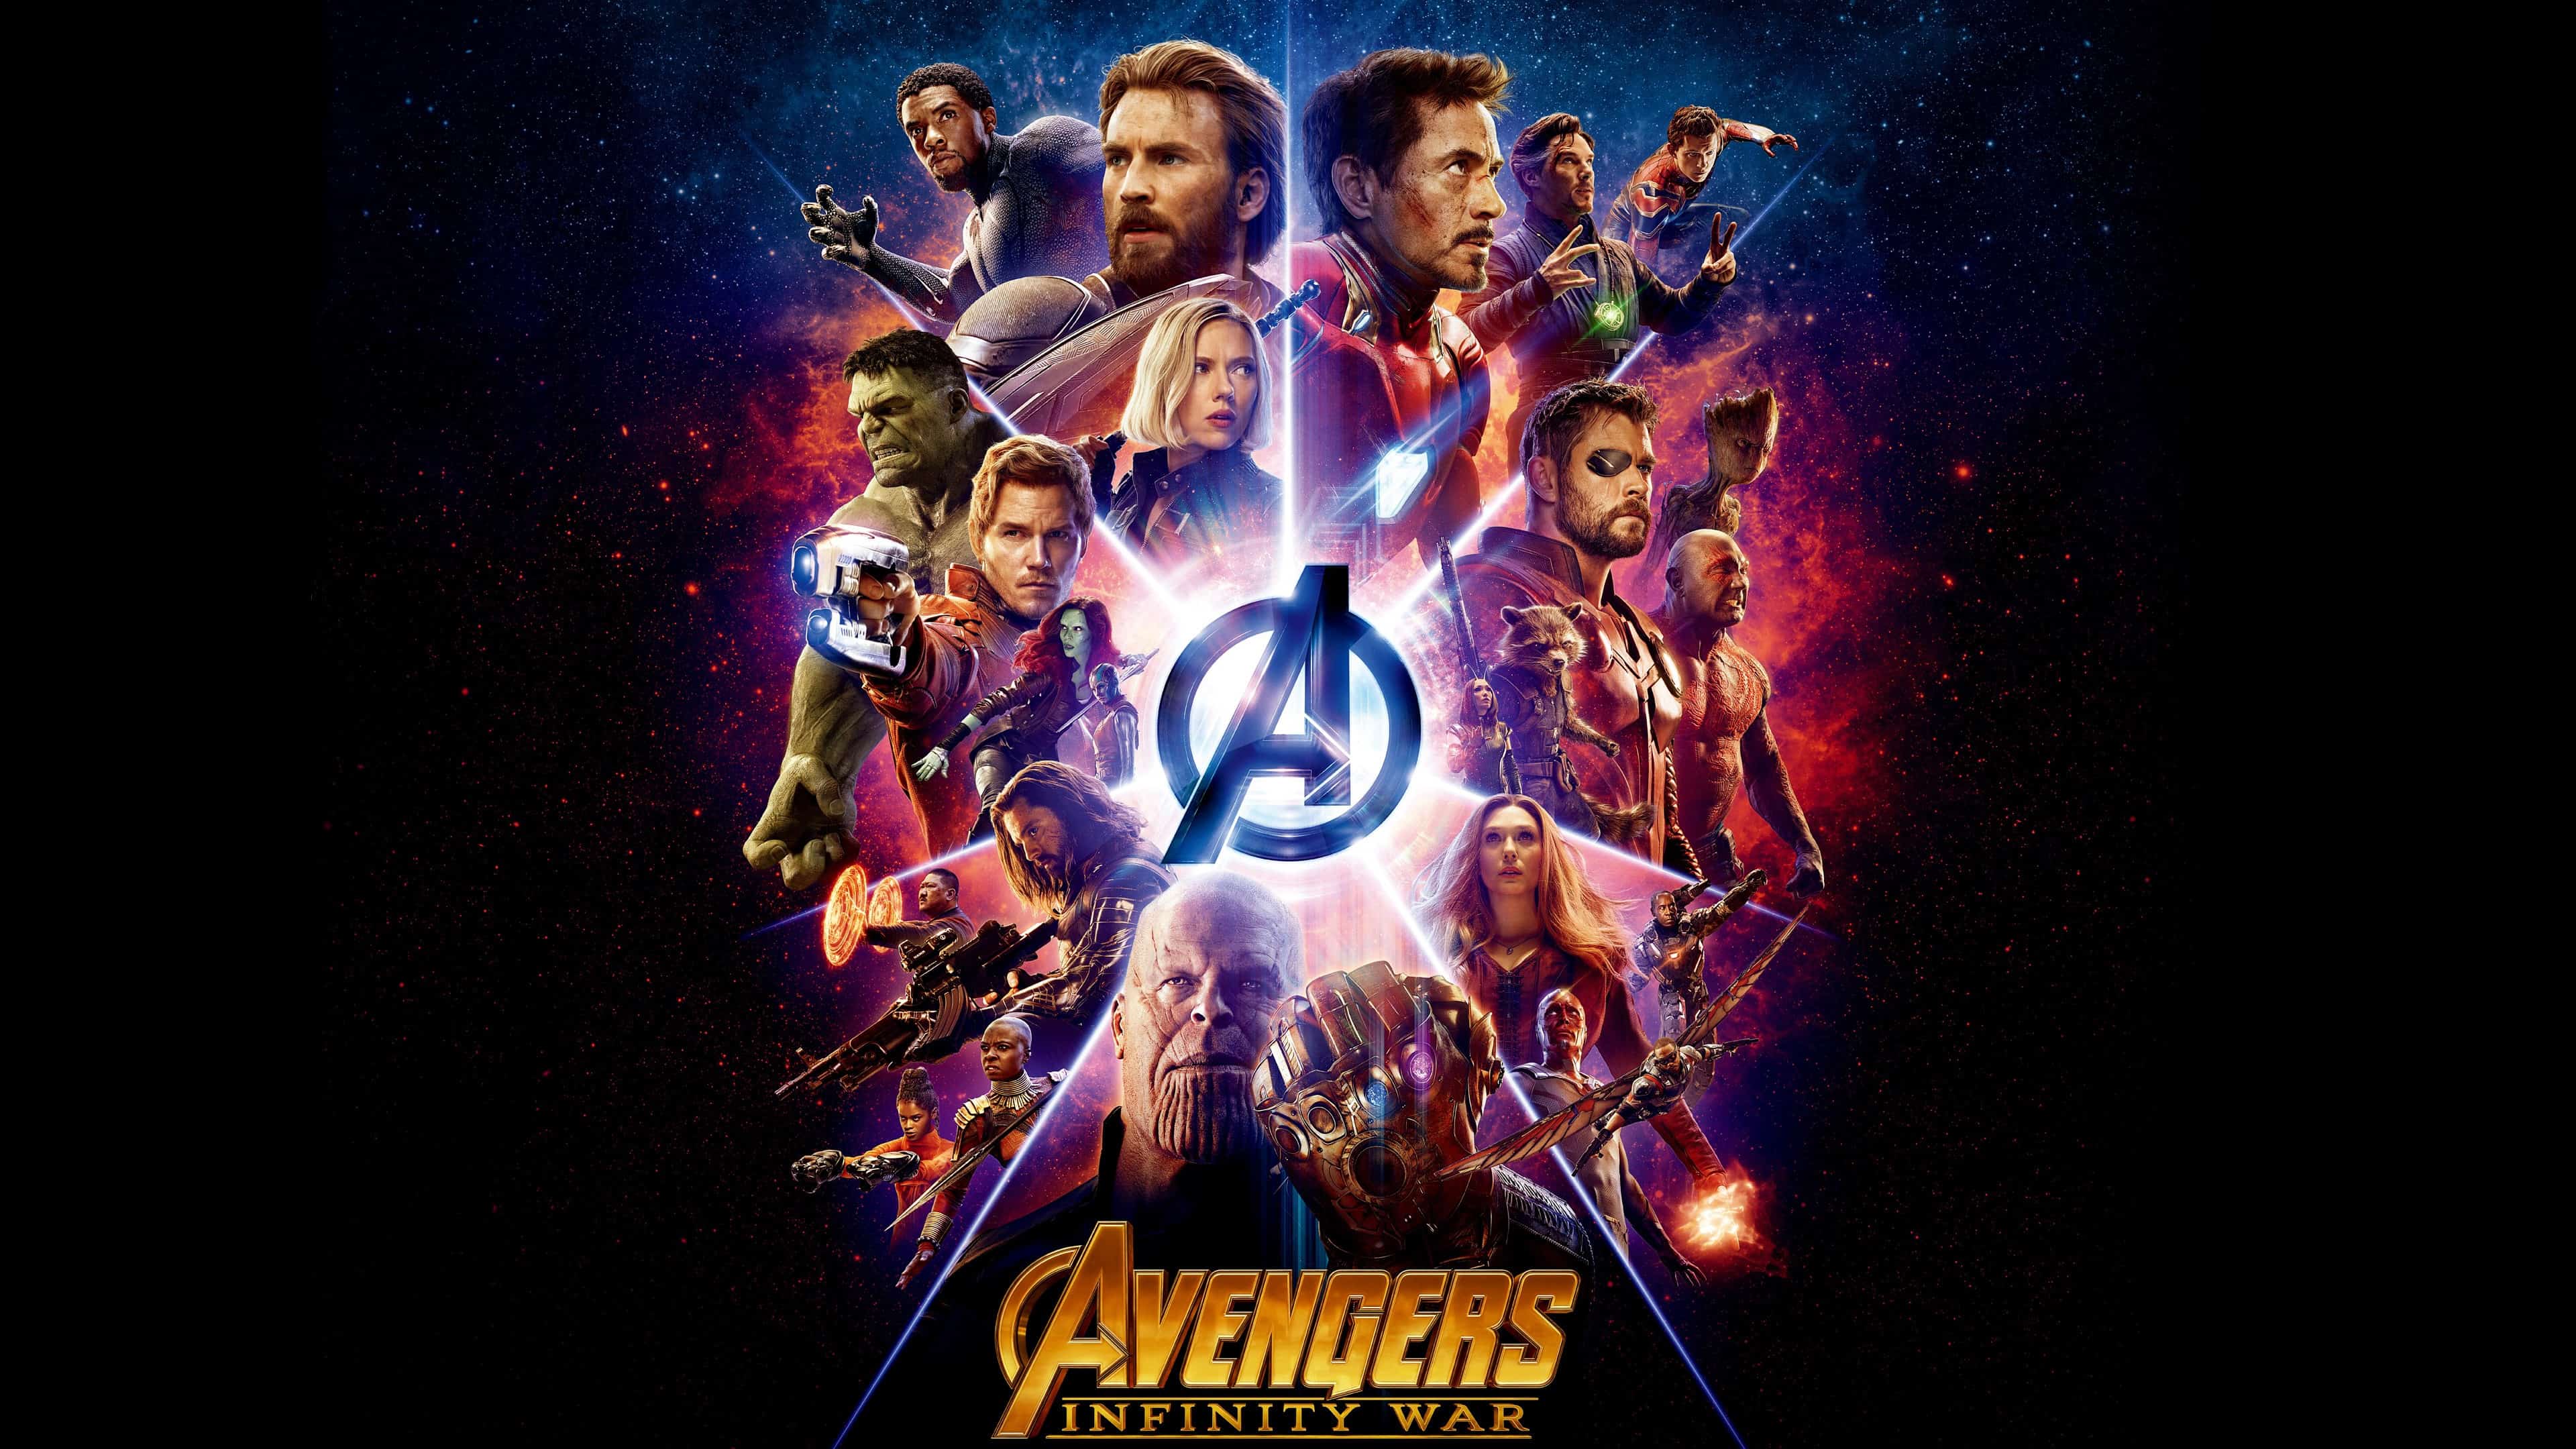 Avengers Infinity War Poster UHD 4K Wallpapers